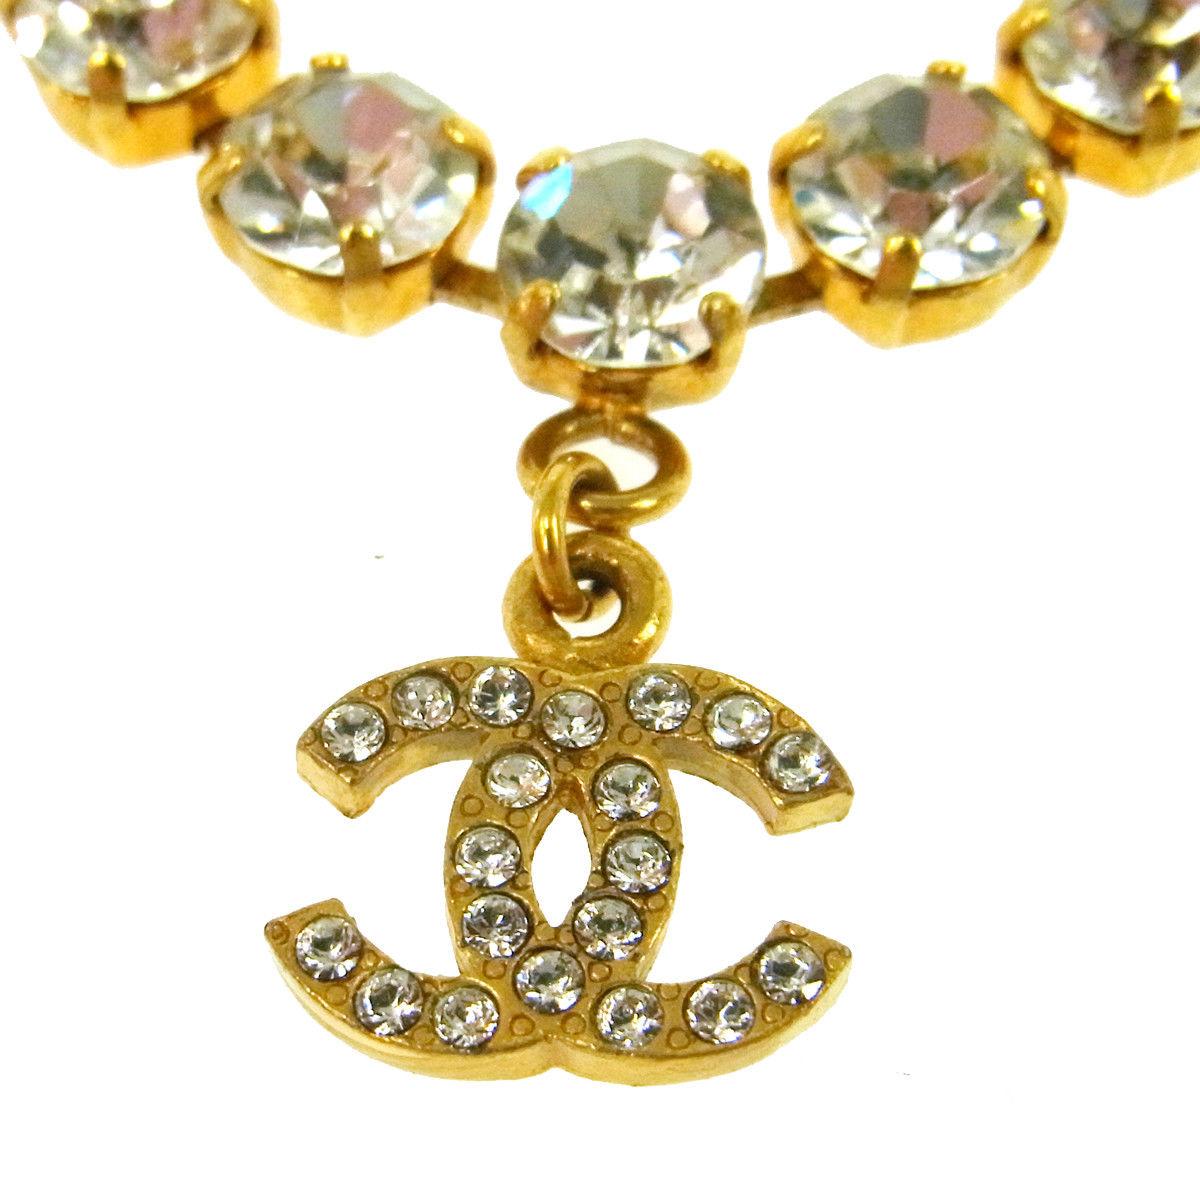 Chanel Vintage Gold Charm Rhinestone Evening Choker Necklace 

Metal
Rhinestone
Gold tone
Hook closure 
Made in France
Charm diameter 0.50